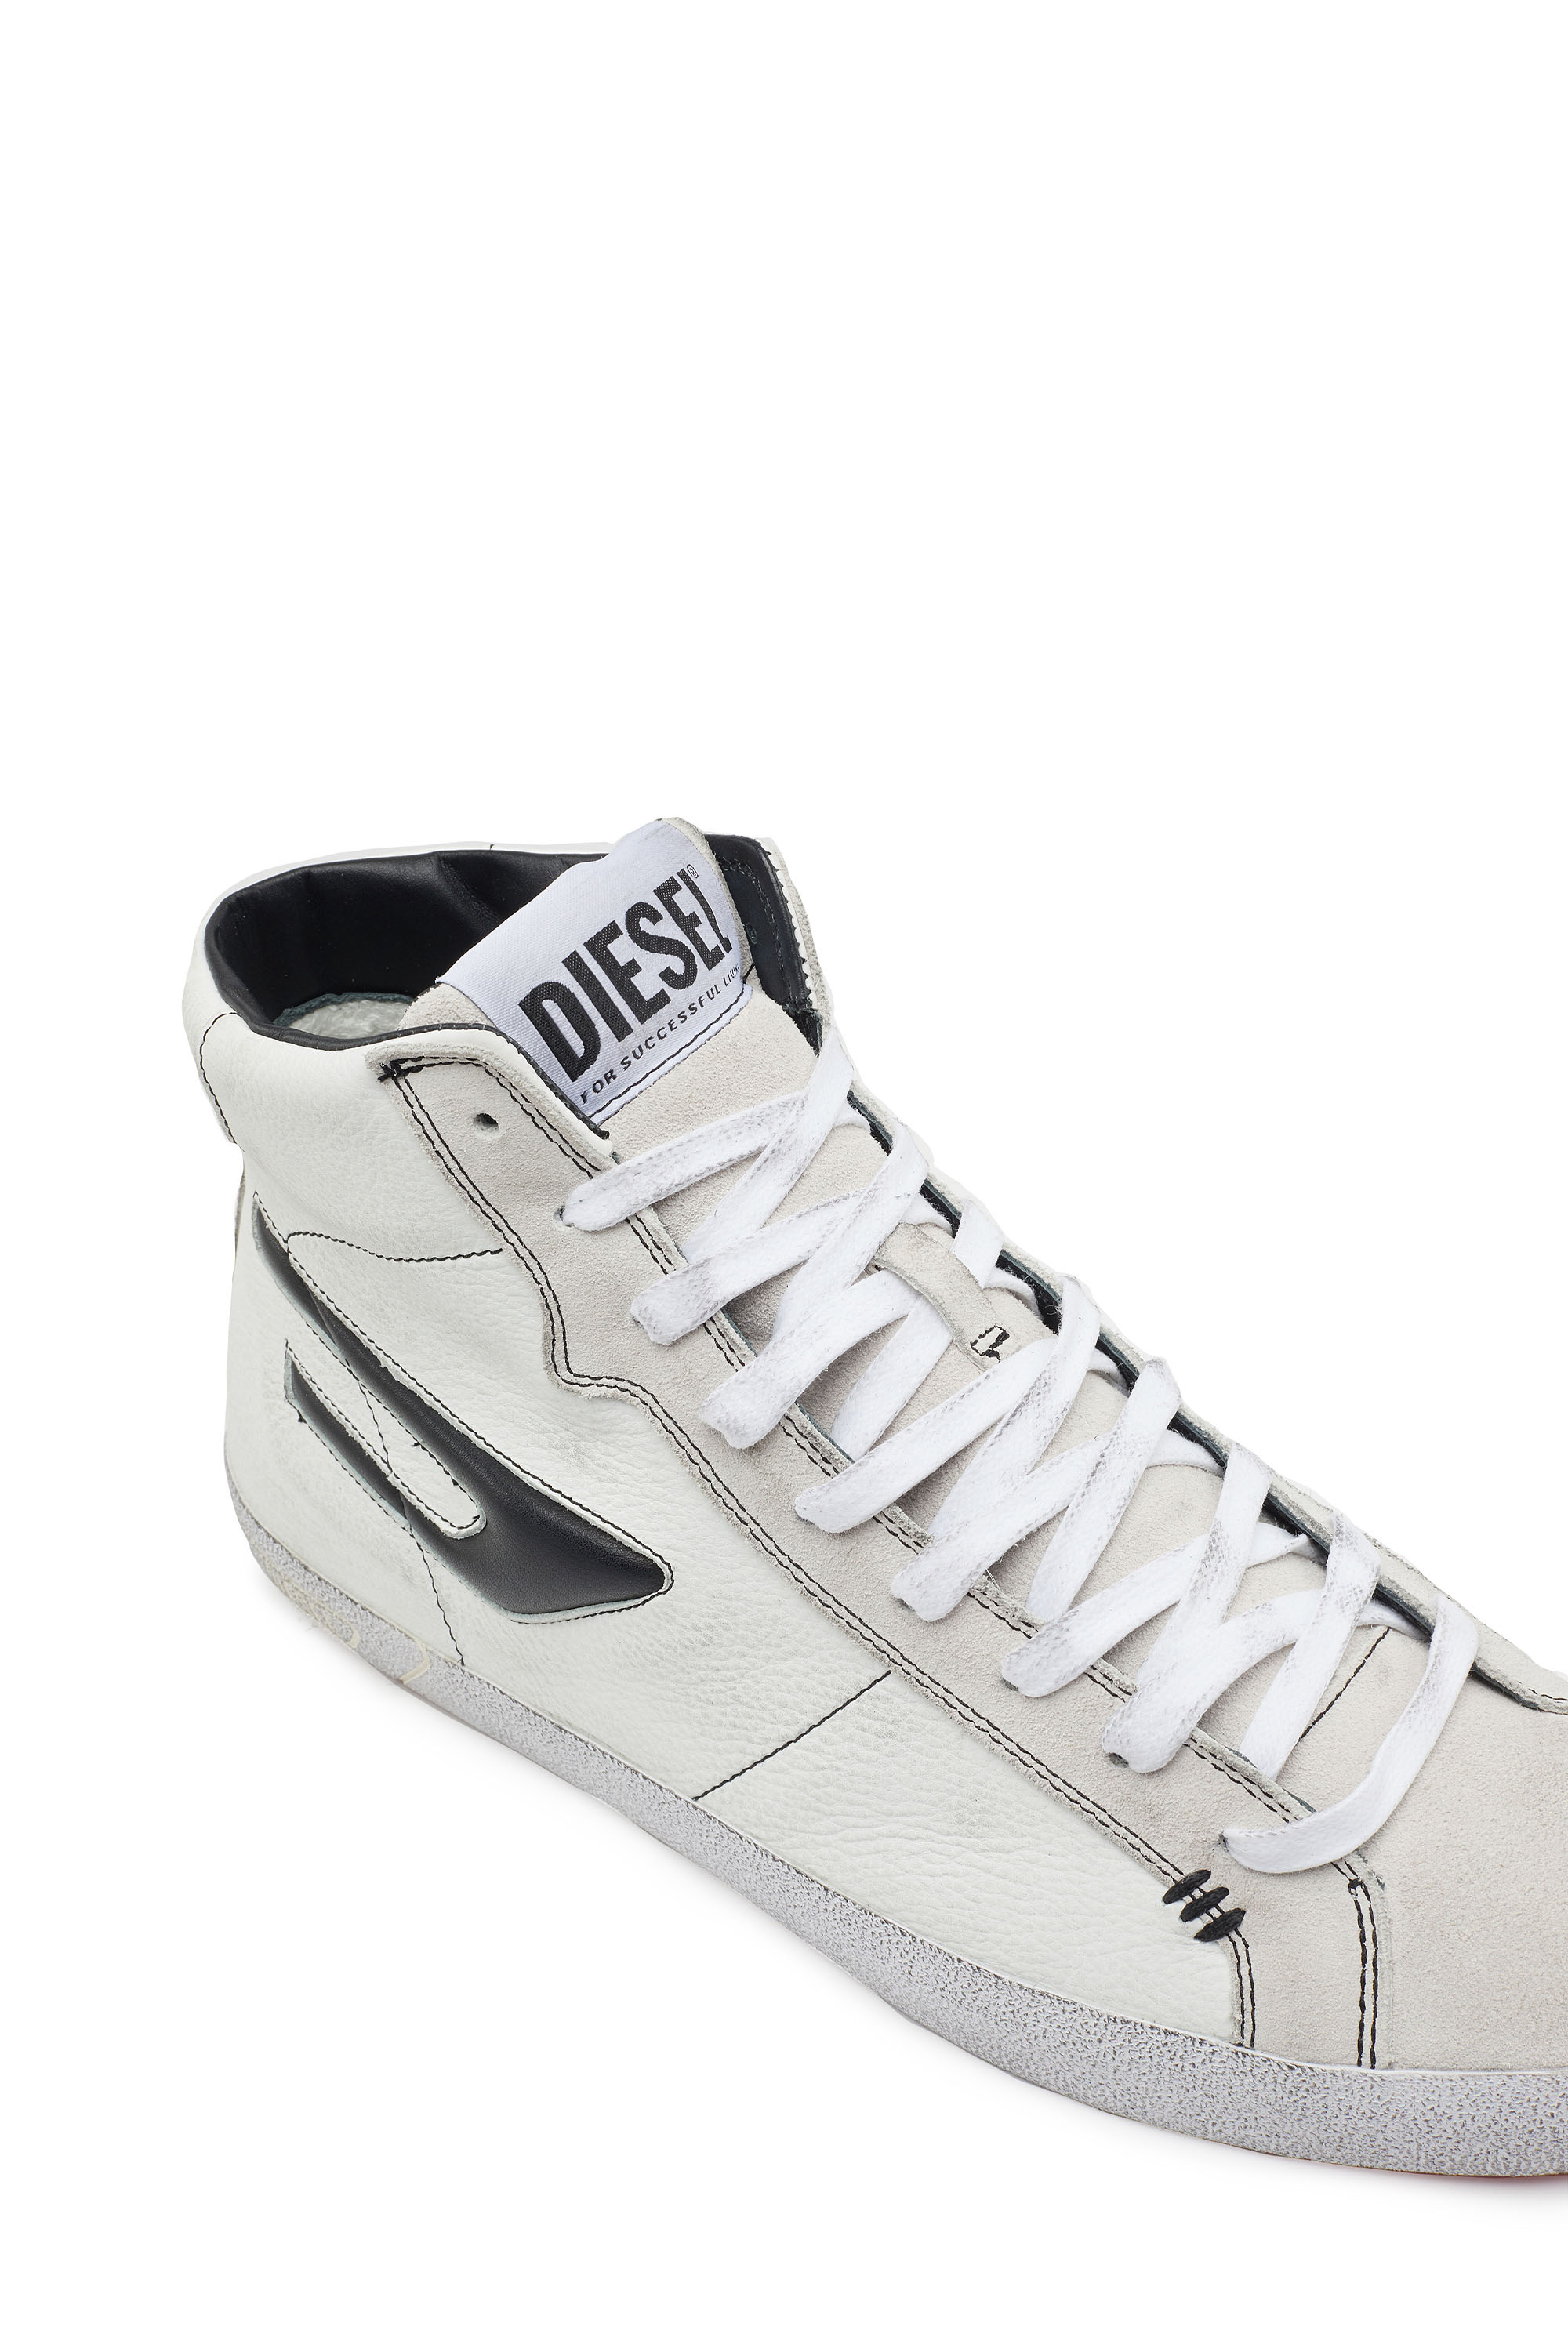 Diesel S-Principia Low Y02739-P1473-H8954 Mens Blue Lifestyle Sneakers -  Ruze Shoes